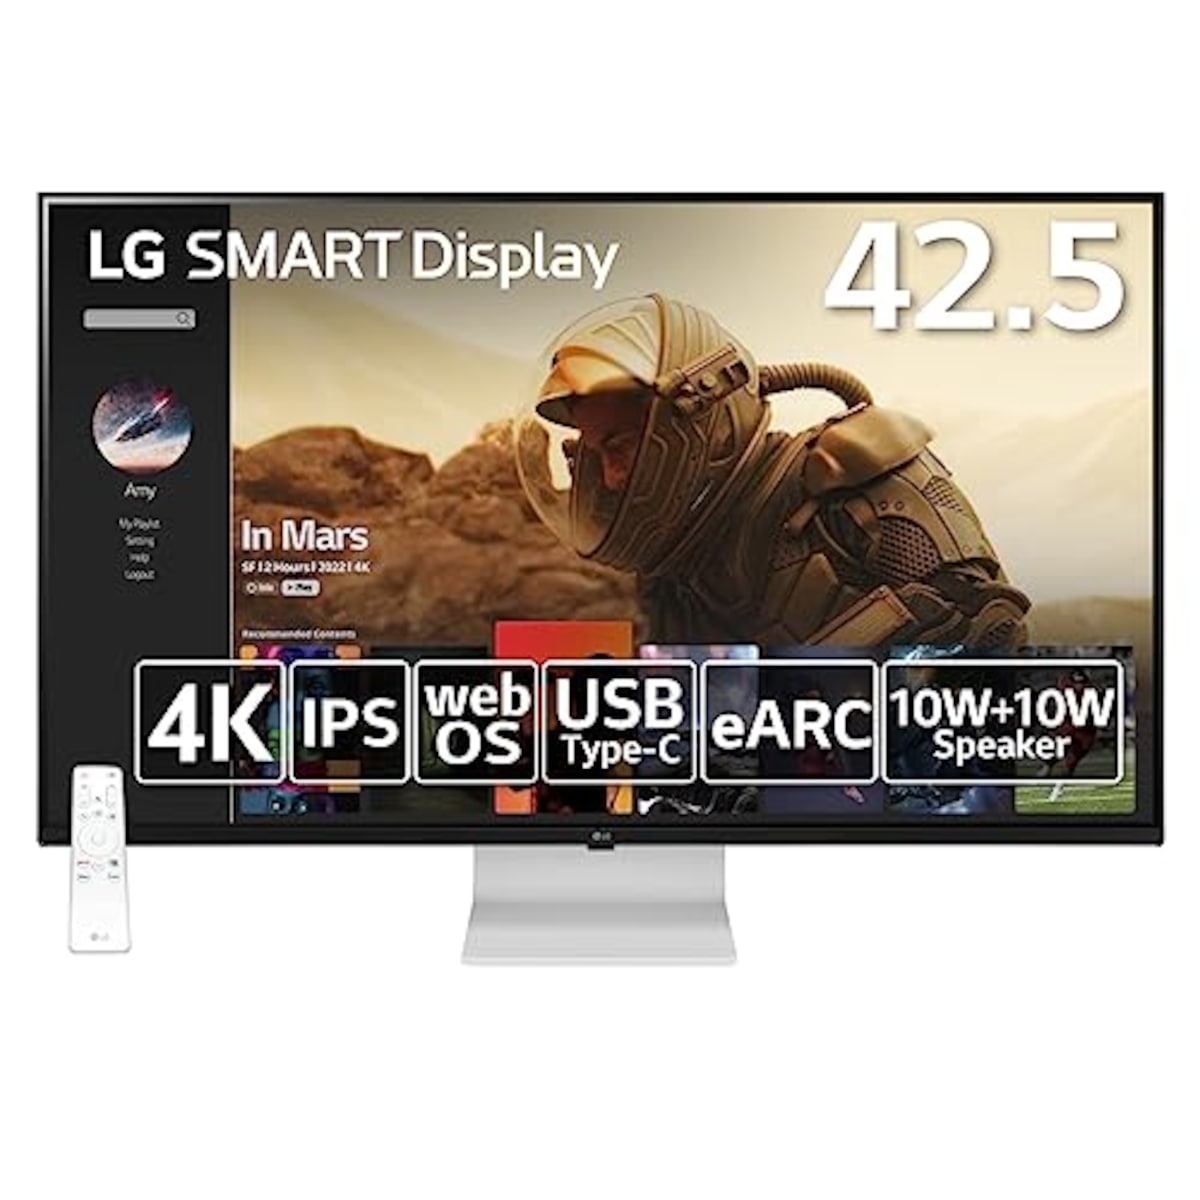 【Amazon.co.jp限定】 43SQ700S-W/LG スマートディスプレイ/SMART Display / 42.5インチ 4K(3840×2160)/ webOS22搭載 / IPS/AirPlay 2 / USB Type-C､eARC対応HDMI/チルト調整対応